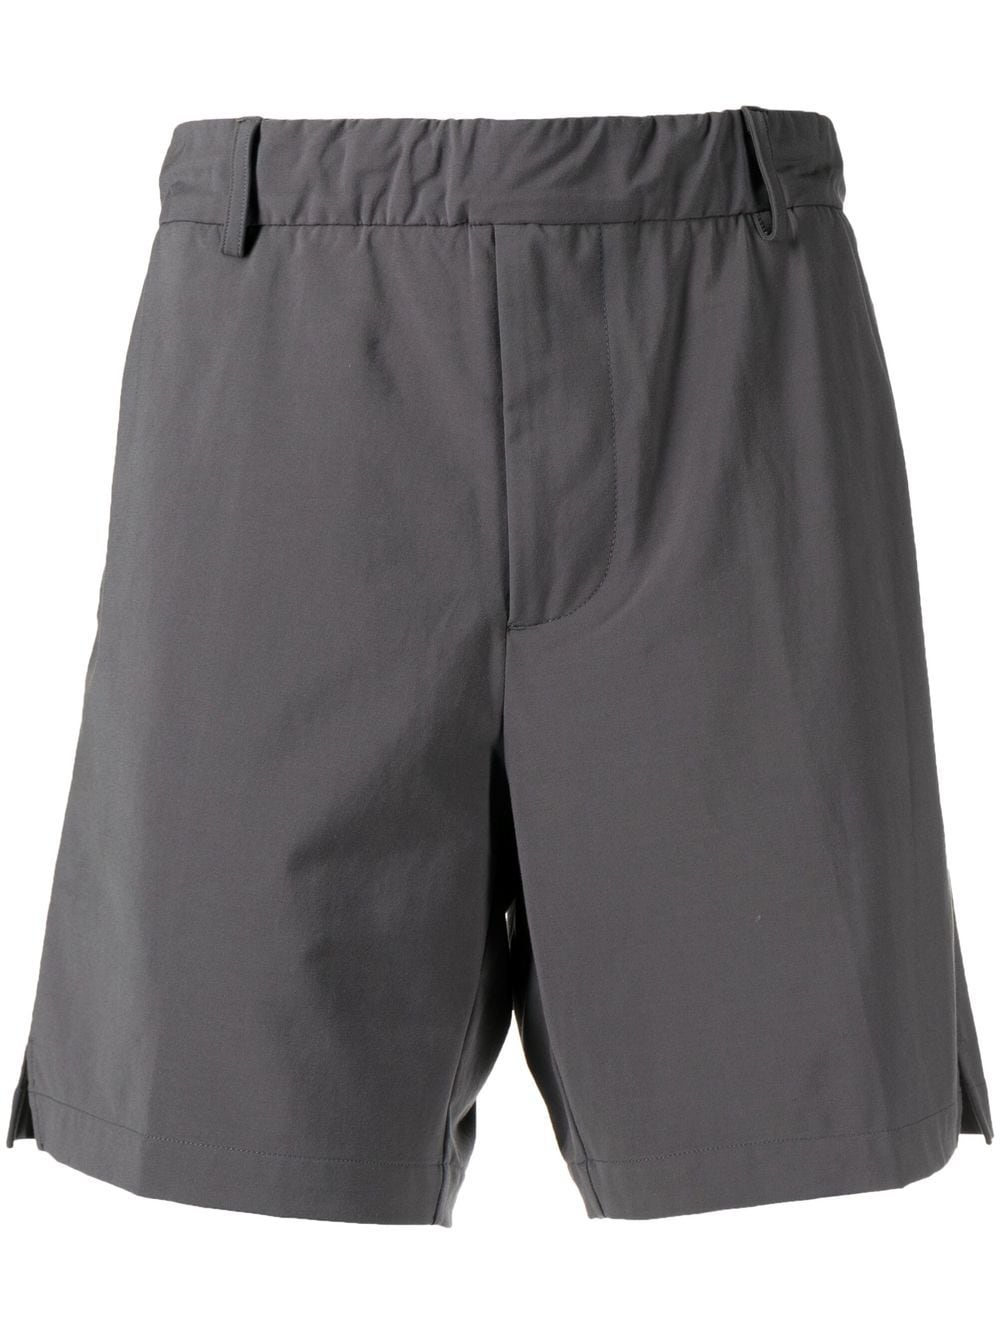 James Perse Performance Golf shorts - Grey von James Perse